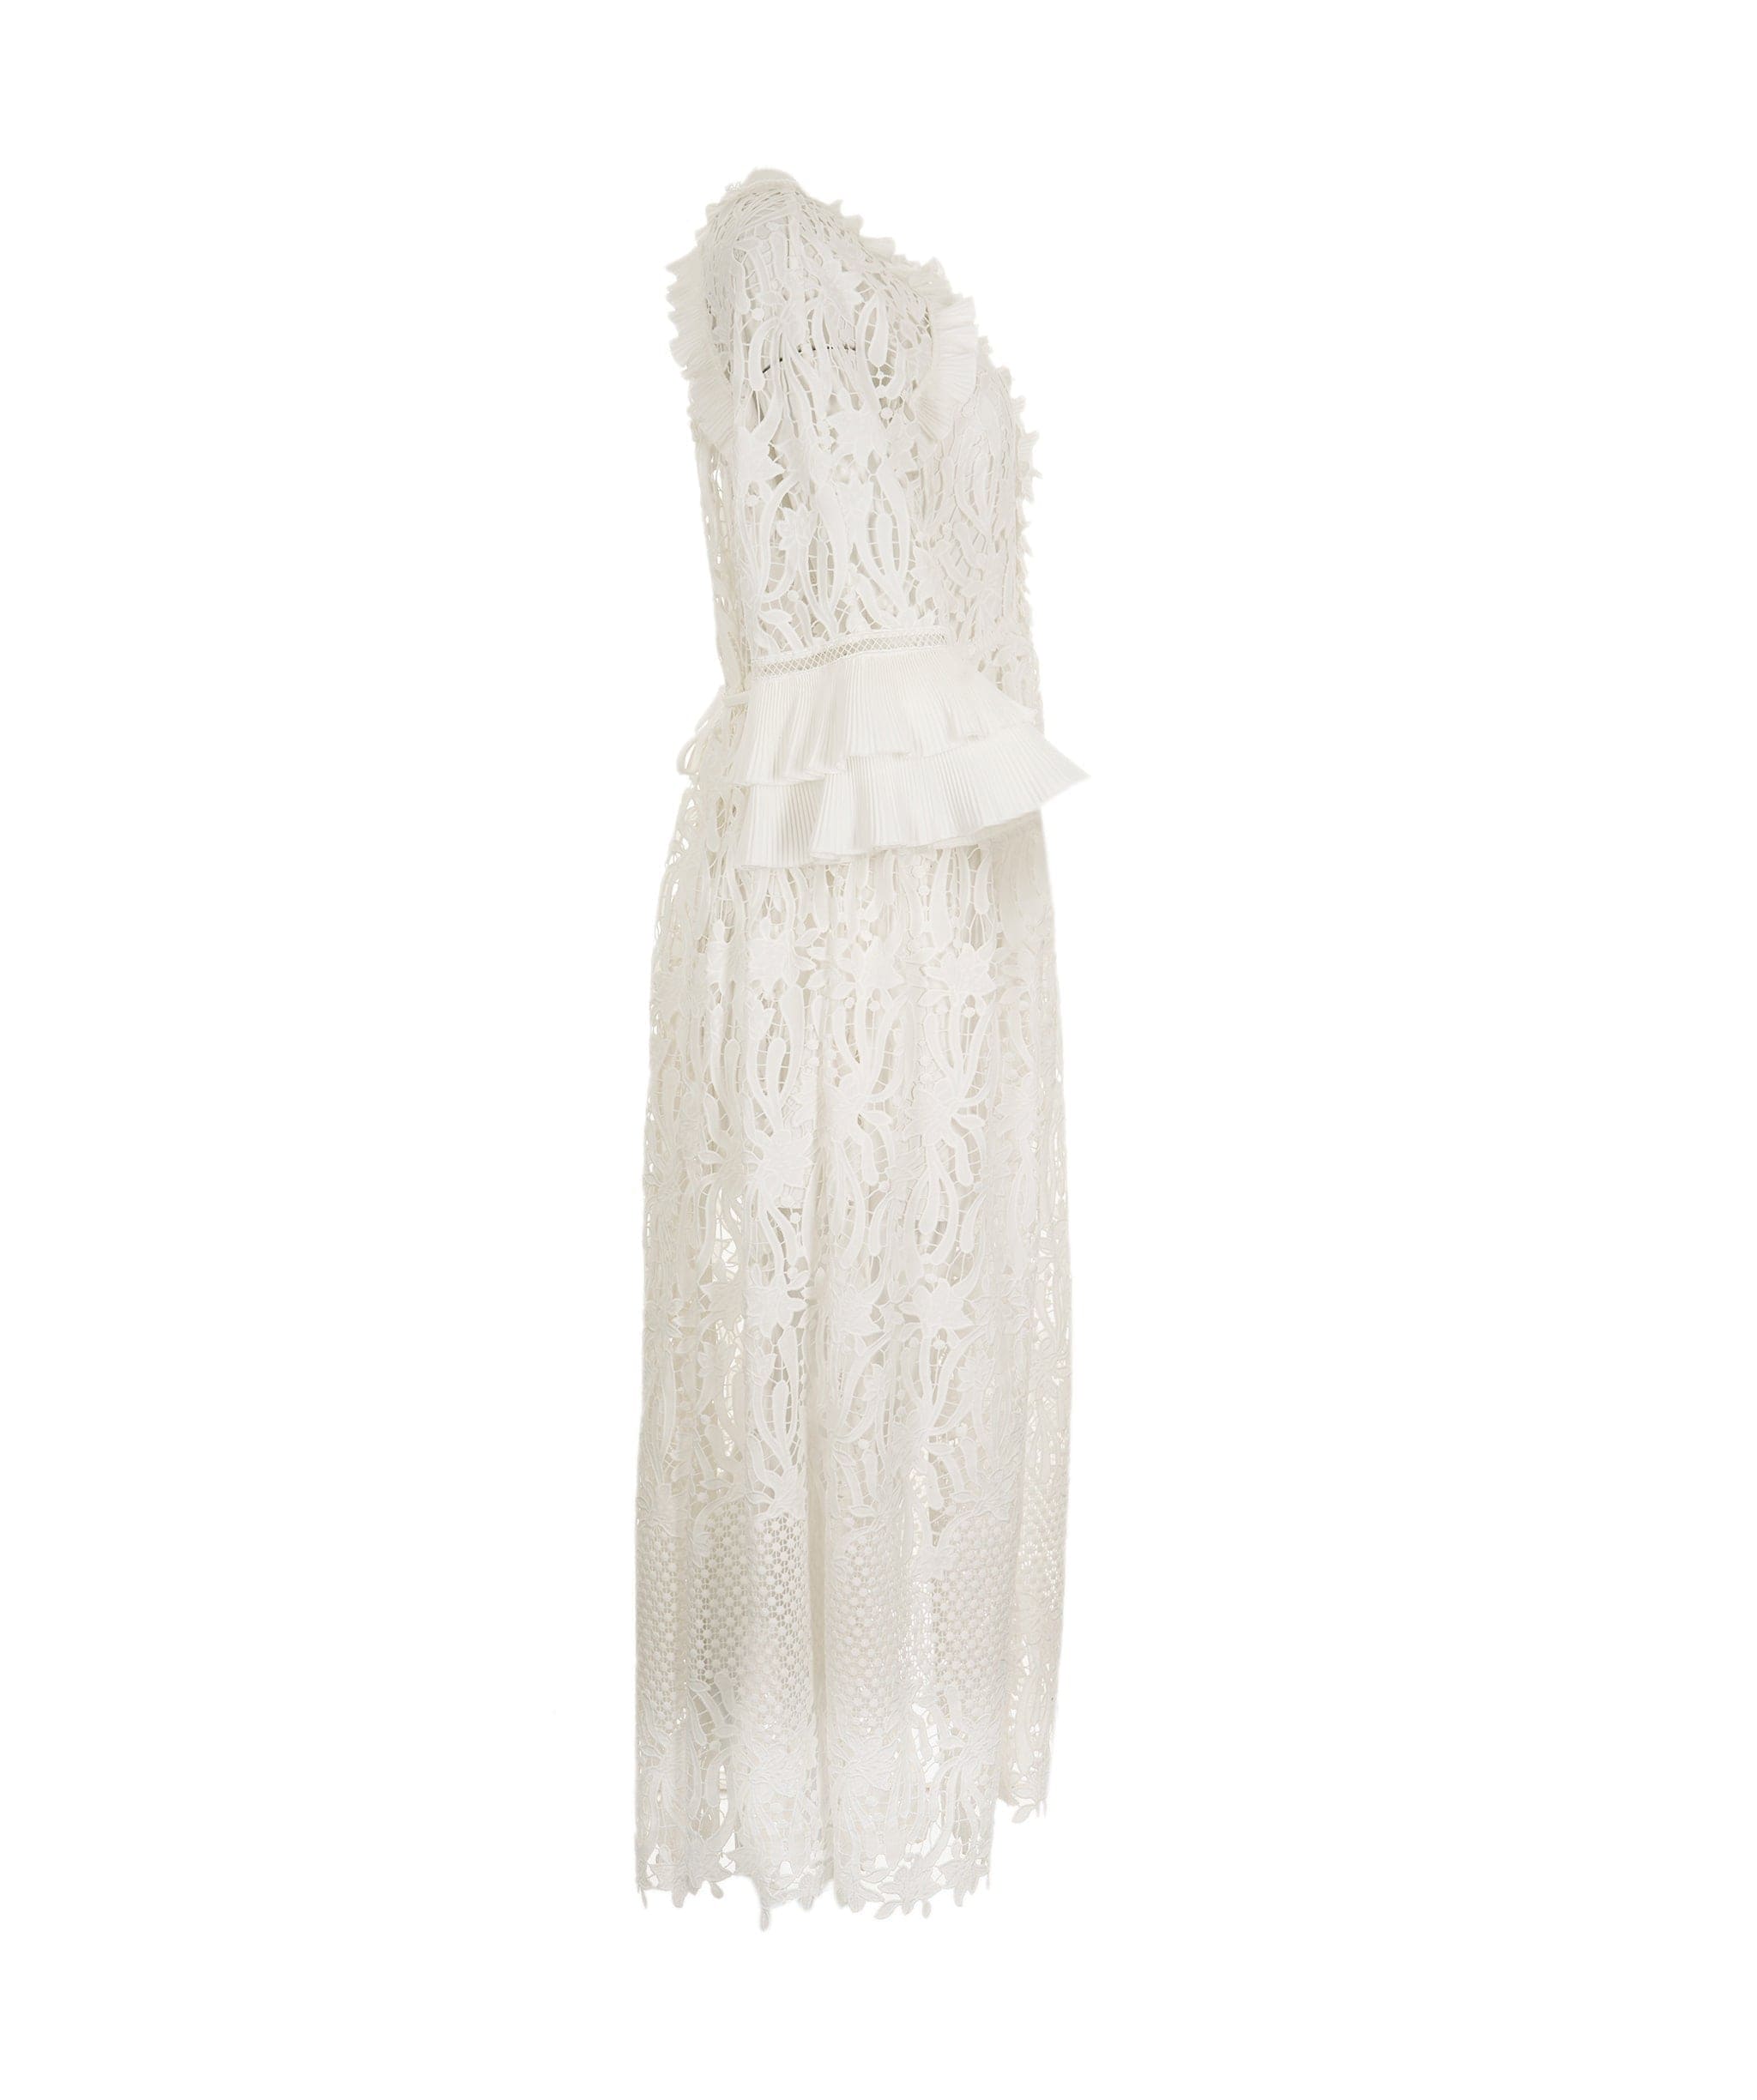 Christian Dior Self Potrait White Dress ALC0818